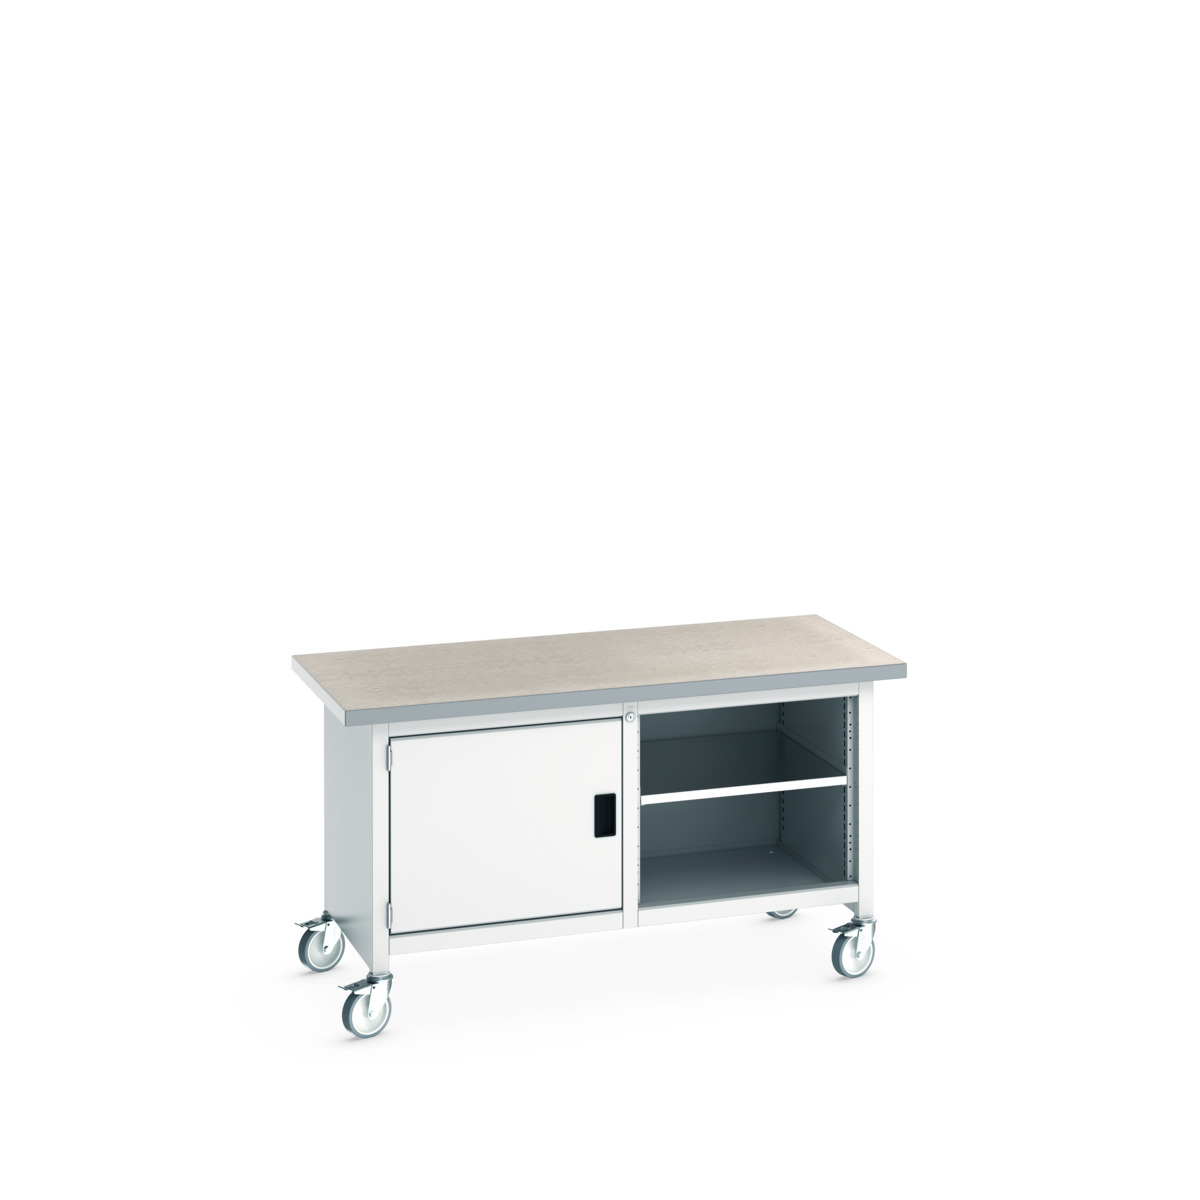 41002096.16V - cubio mobile storage bench (lino)